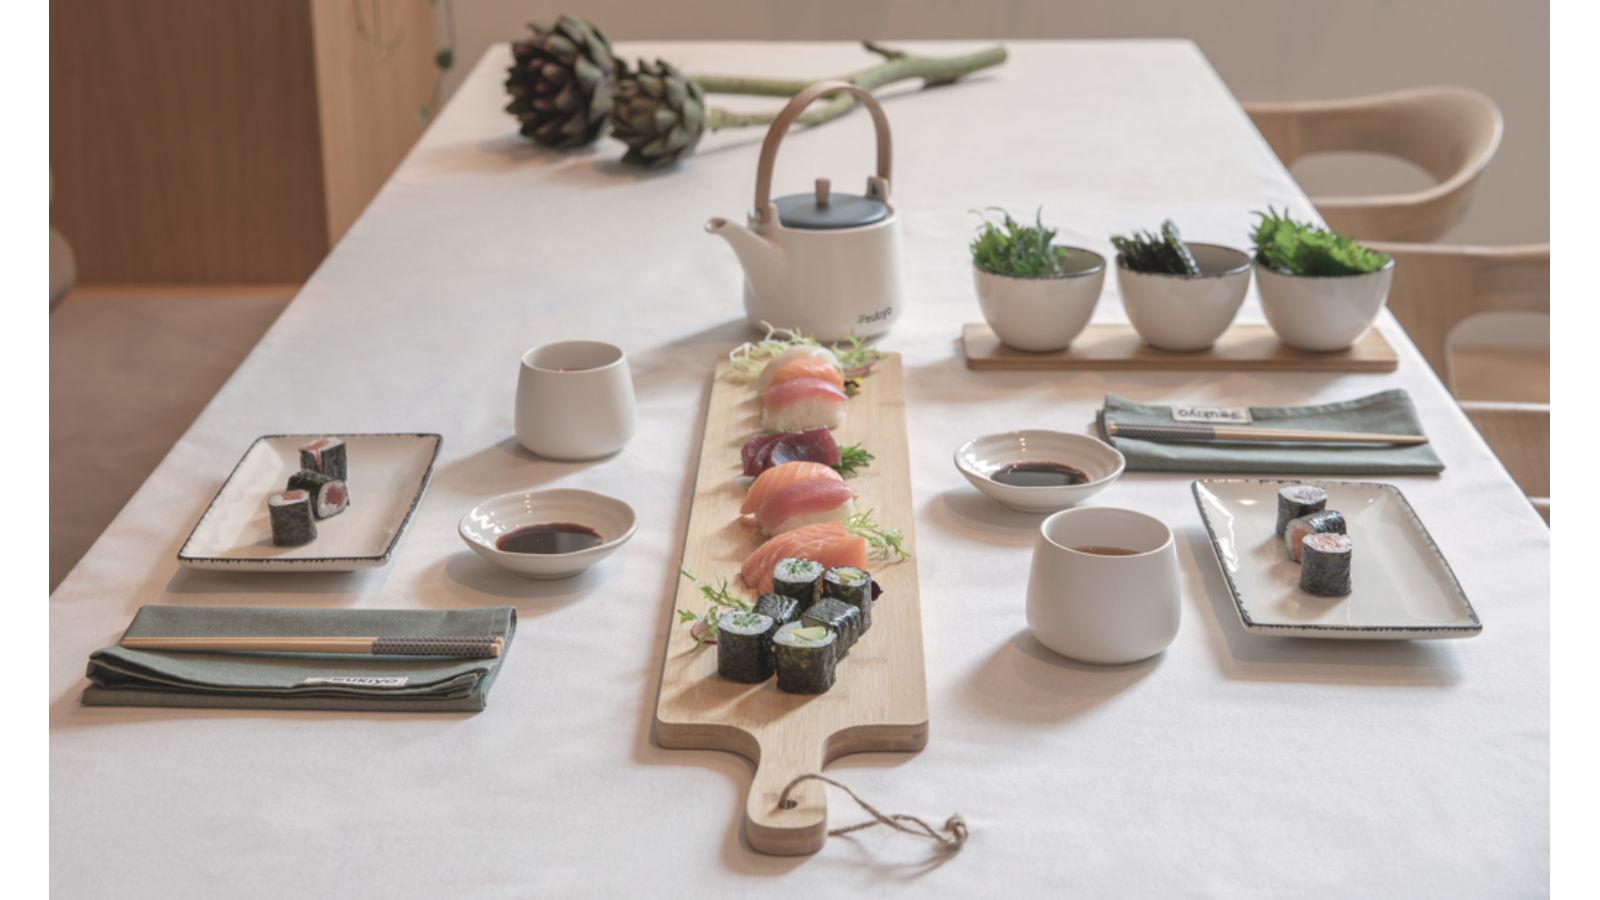 <p>(Centre) Large bamboo tray and Ukiyo teapot, Xindao's tableware</p>
